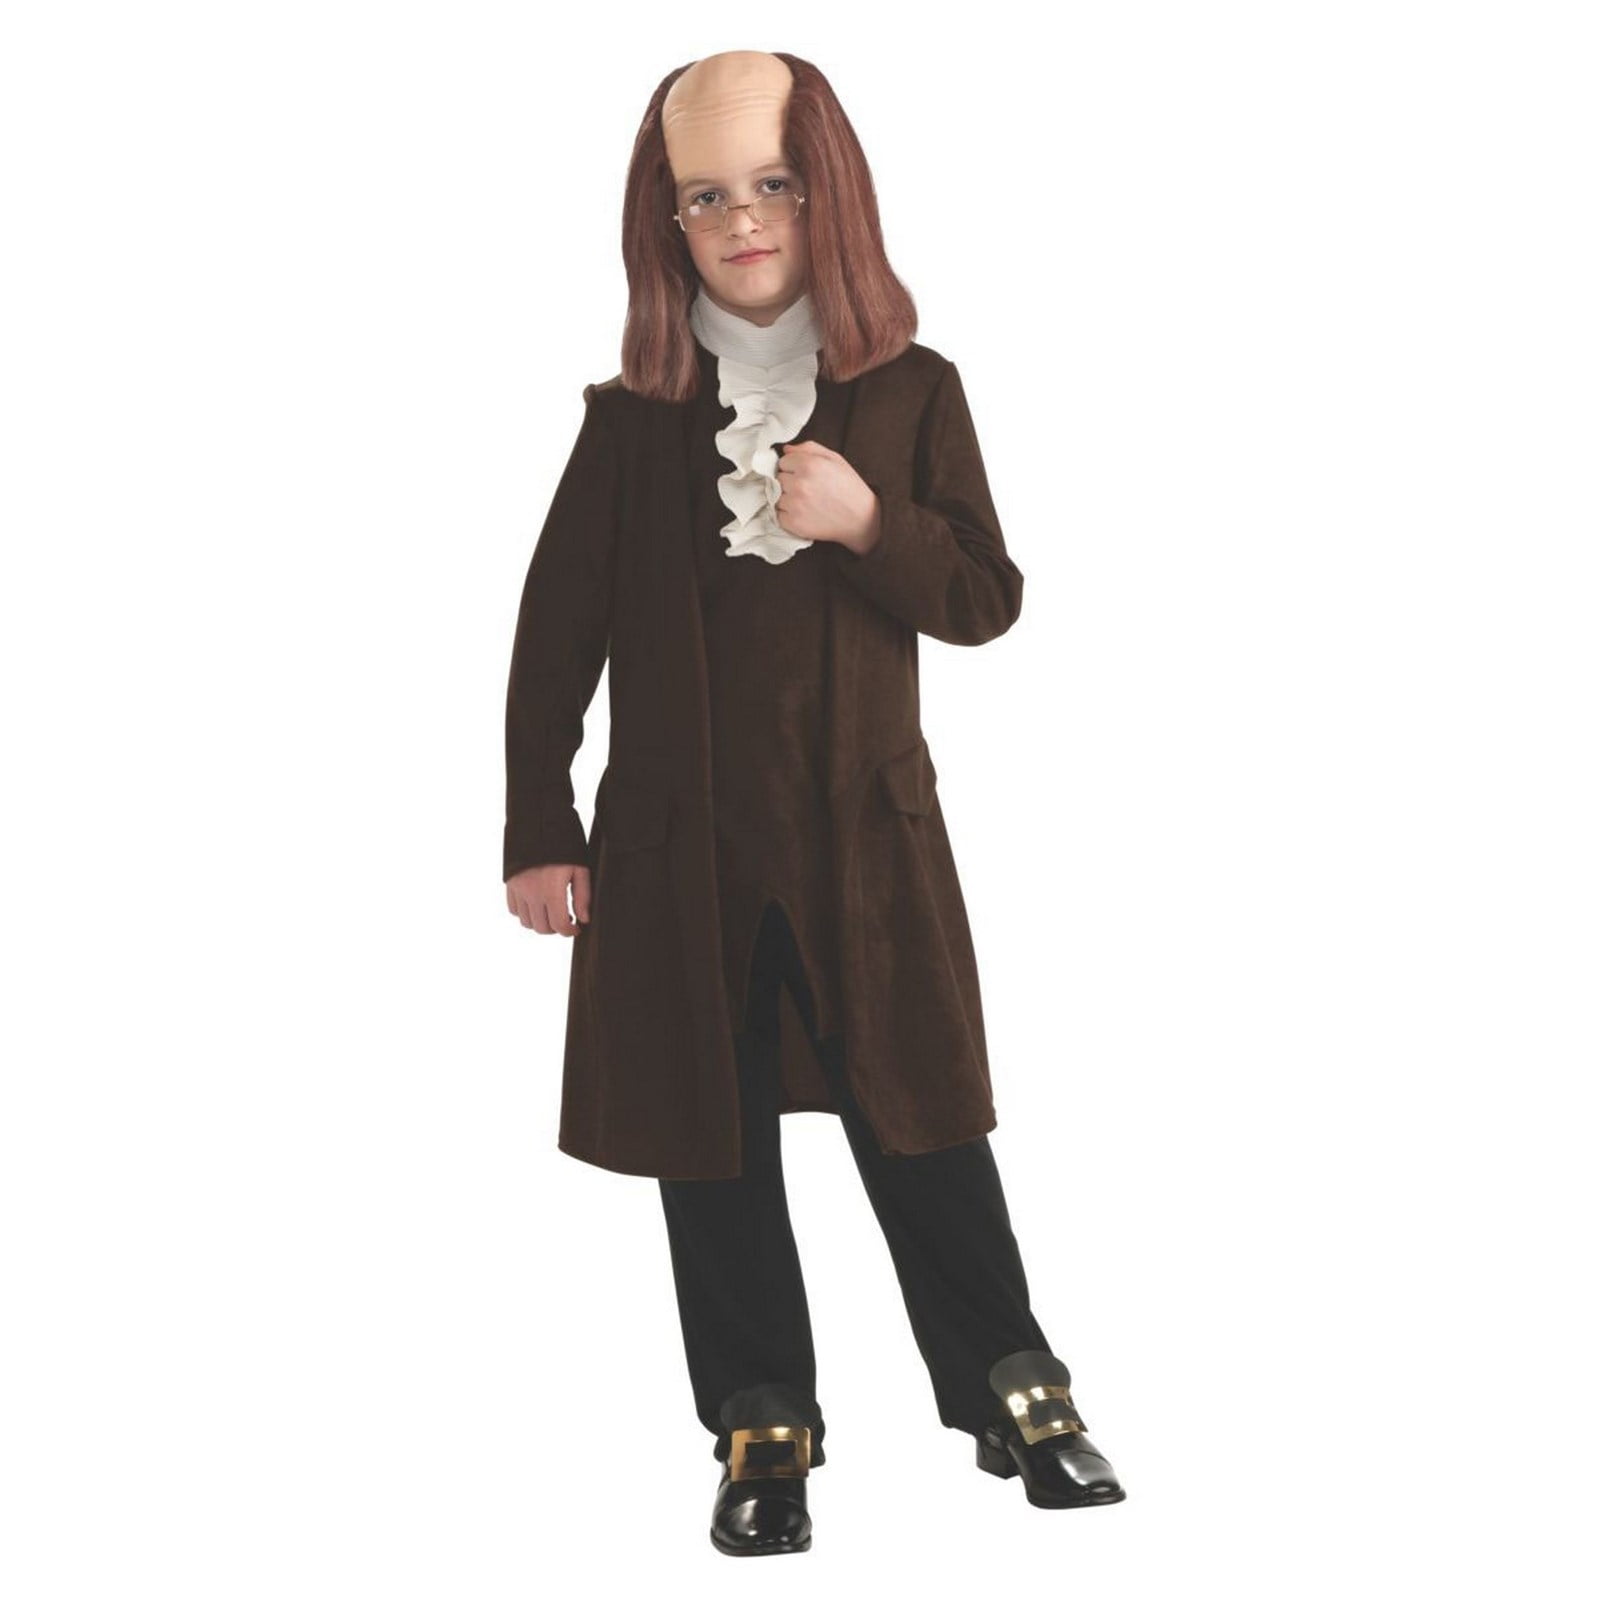 Details about   Child Benjamin Franklin Halloween Costume